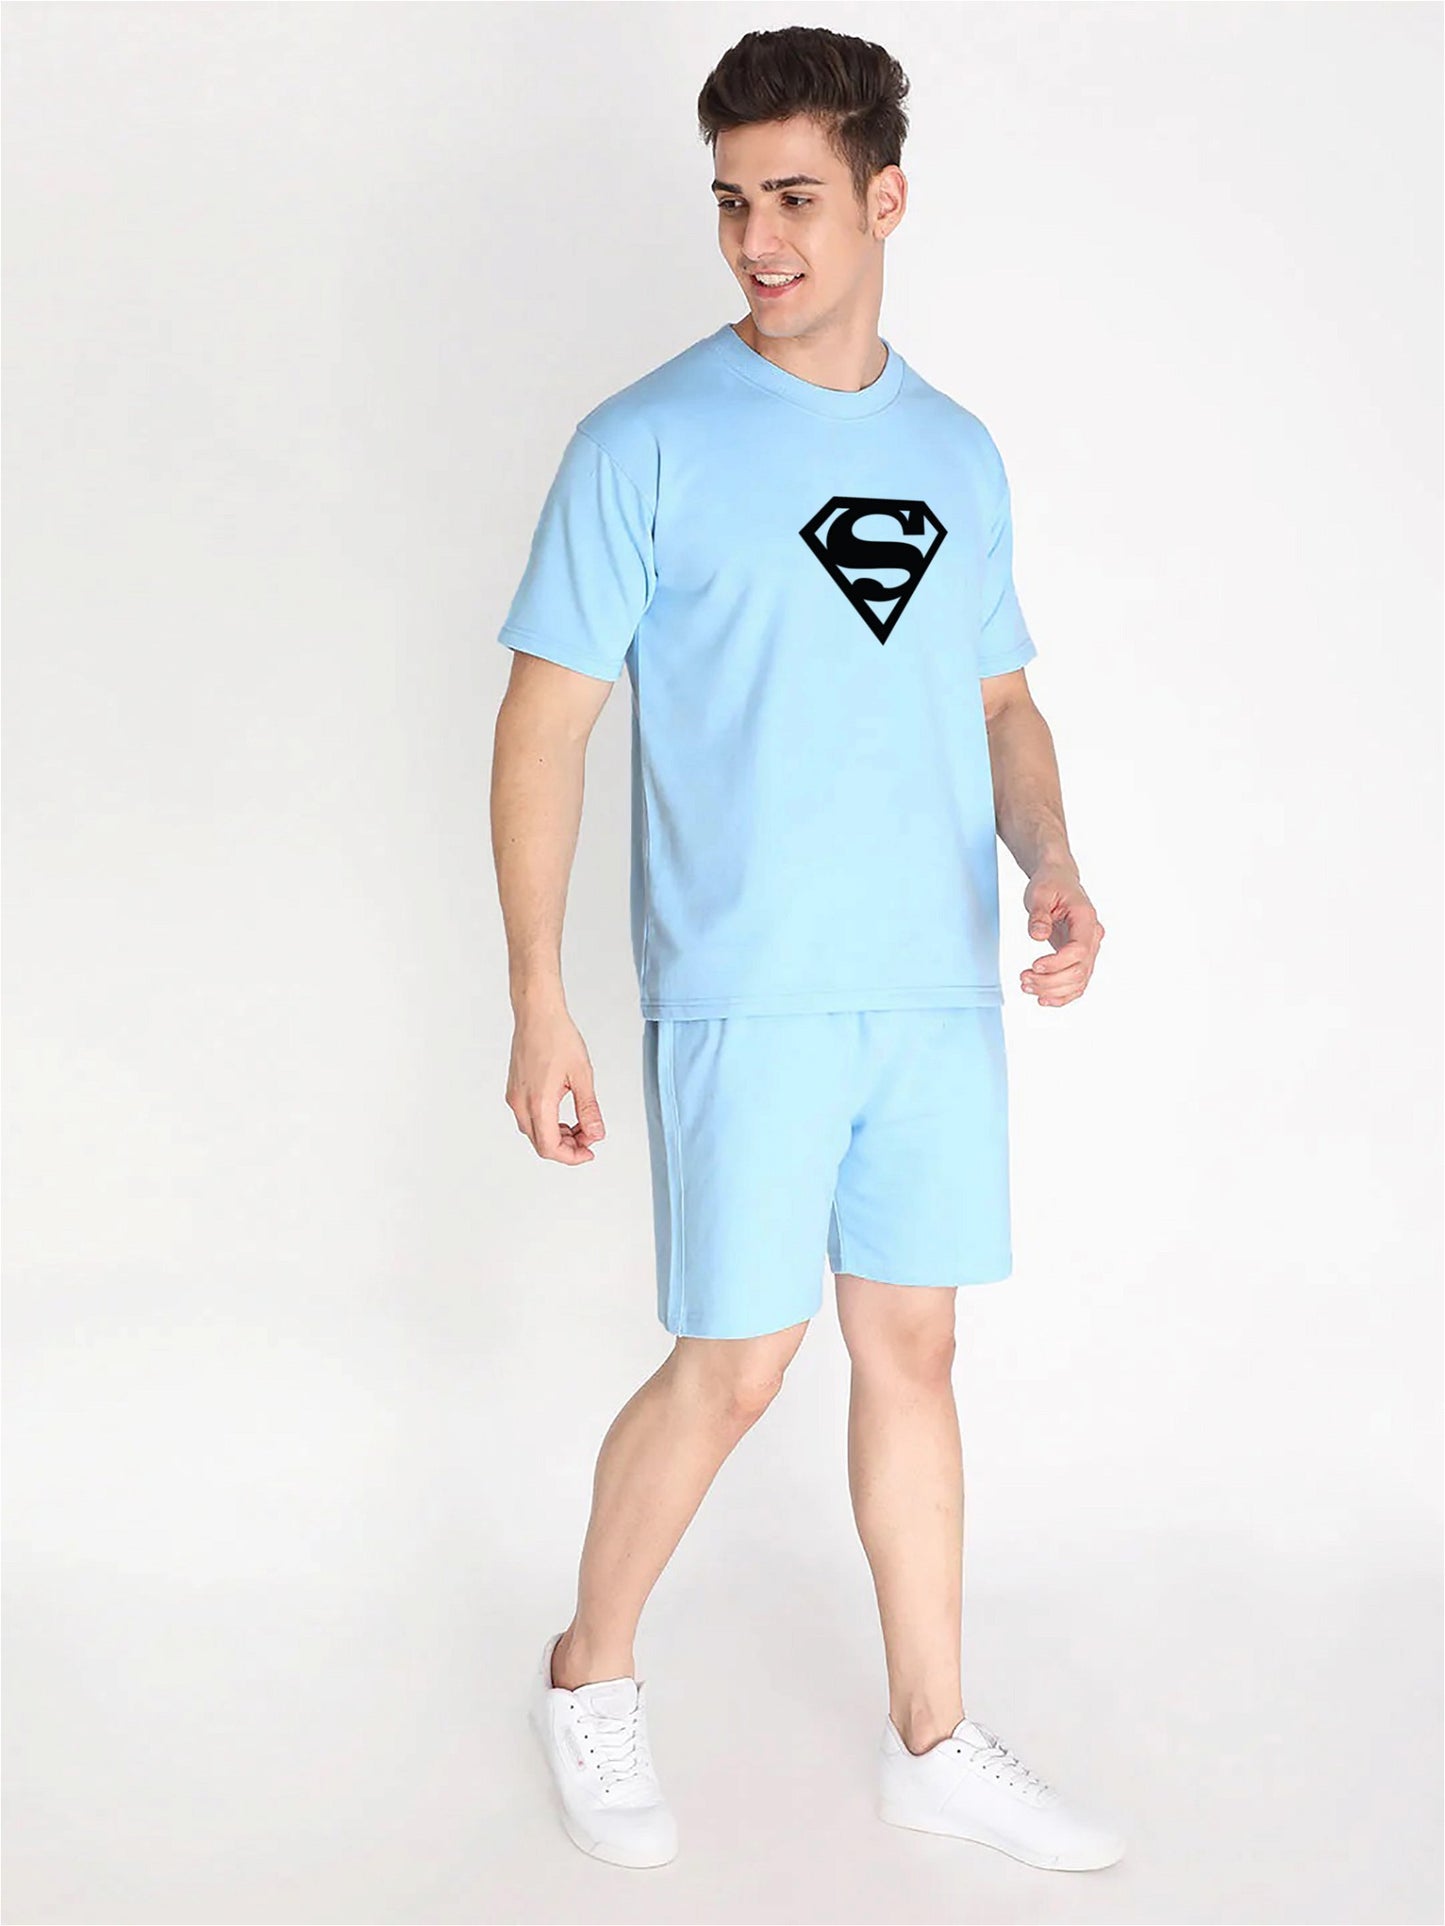 Sky Plain T Shirt Half Sleeve And Shorts With Pocket